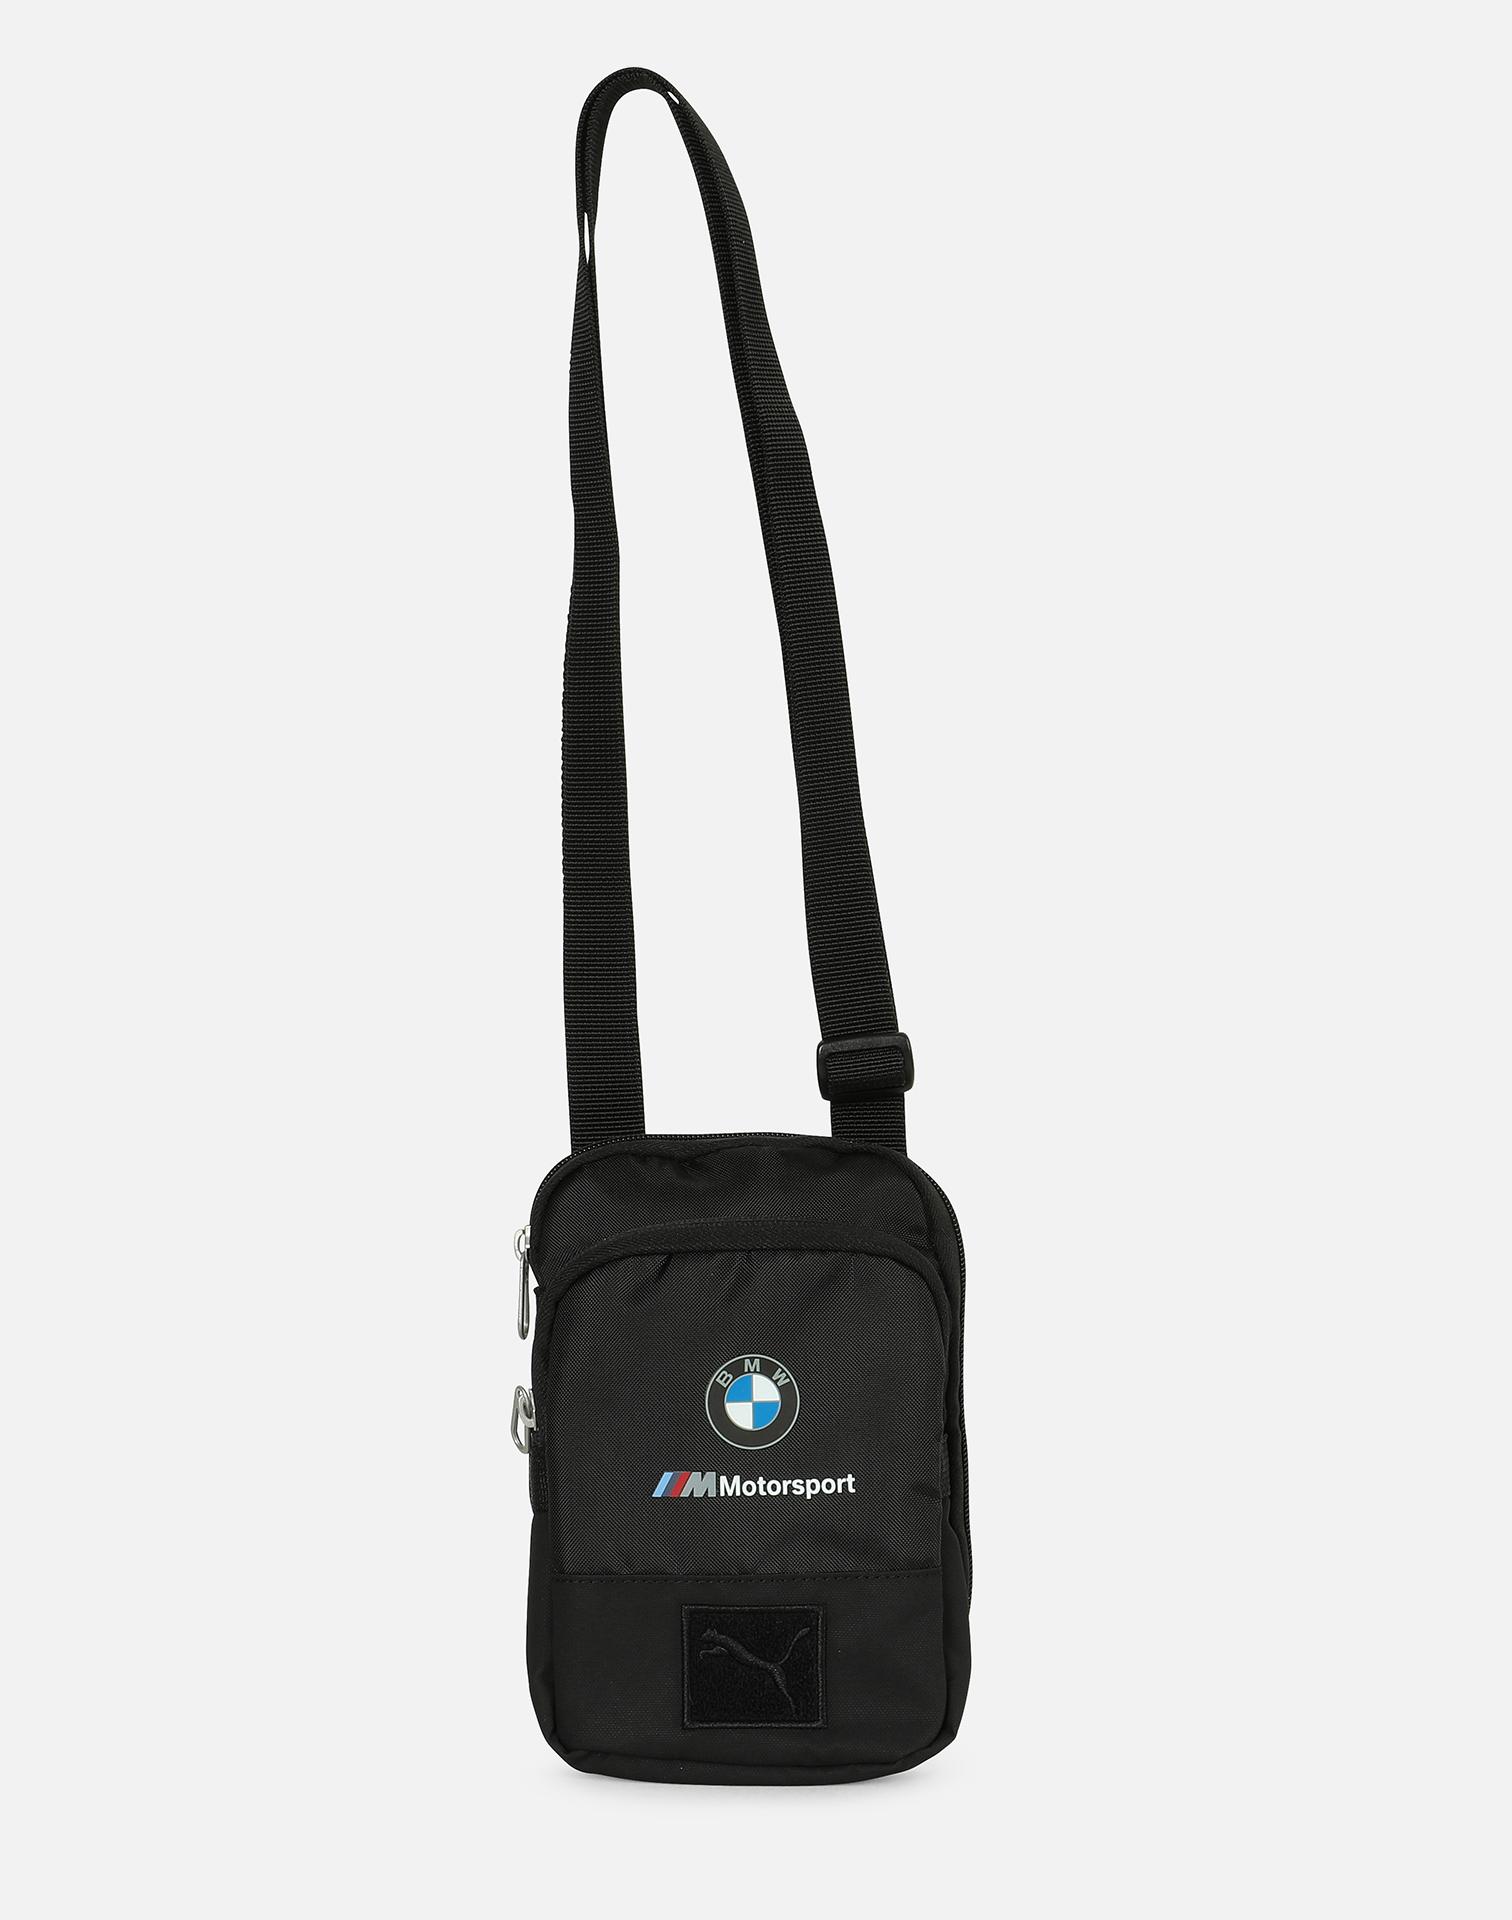 PUMA Bmw Motorsport Small Portable Bag in Black - Lyst